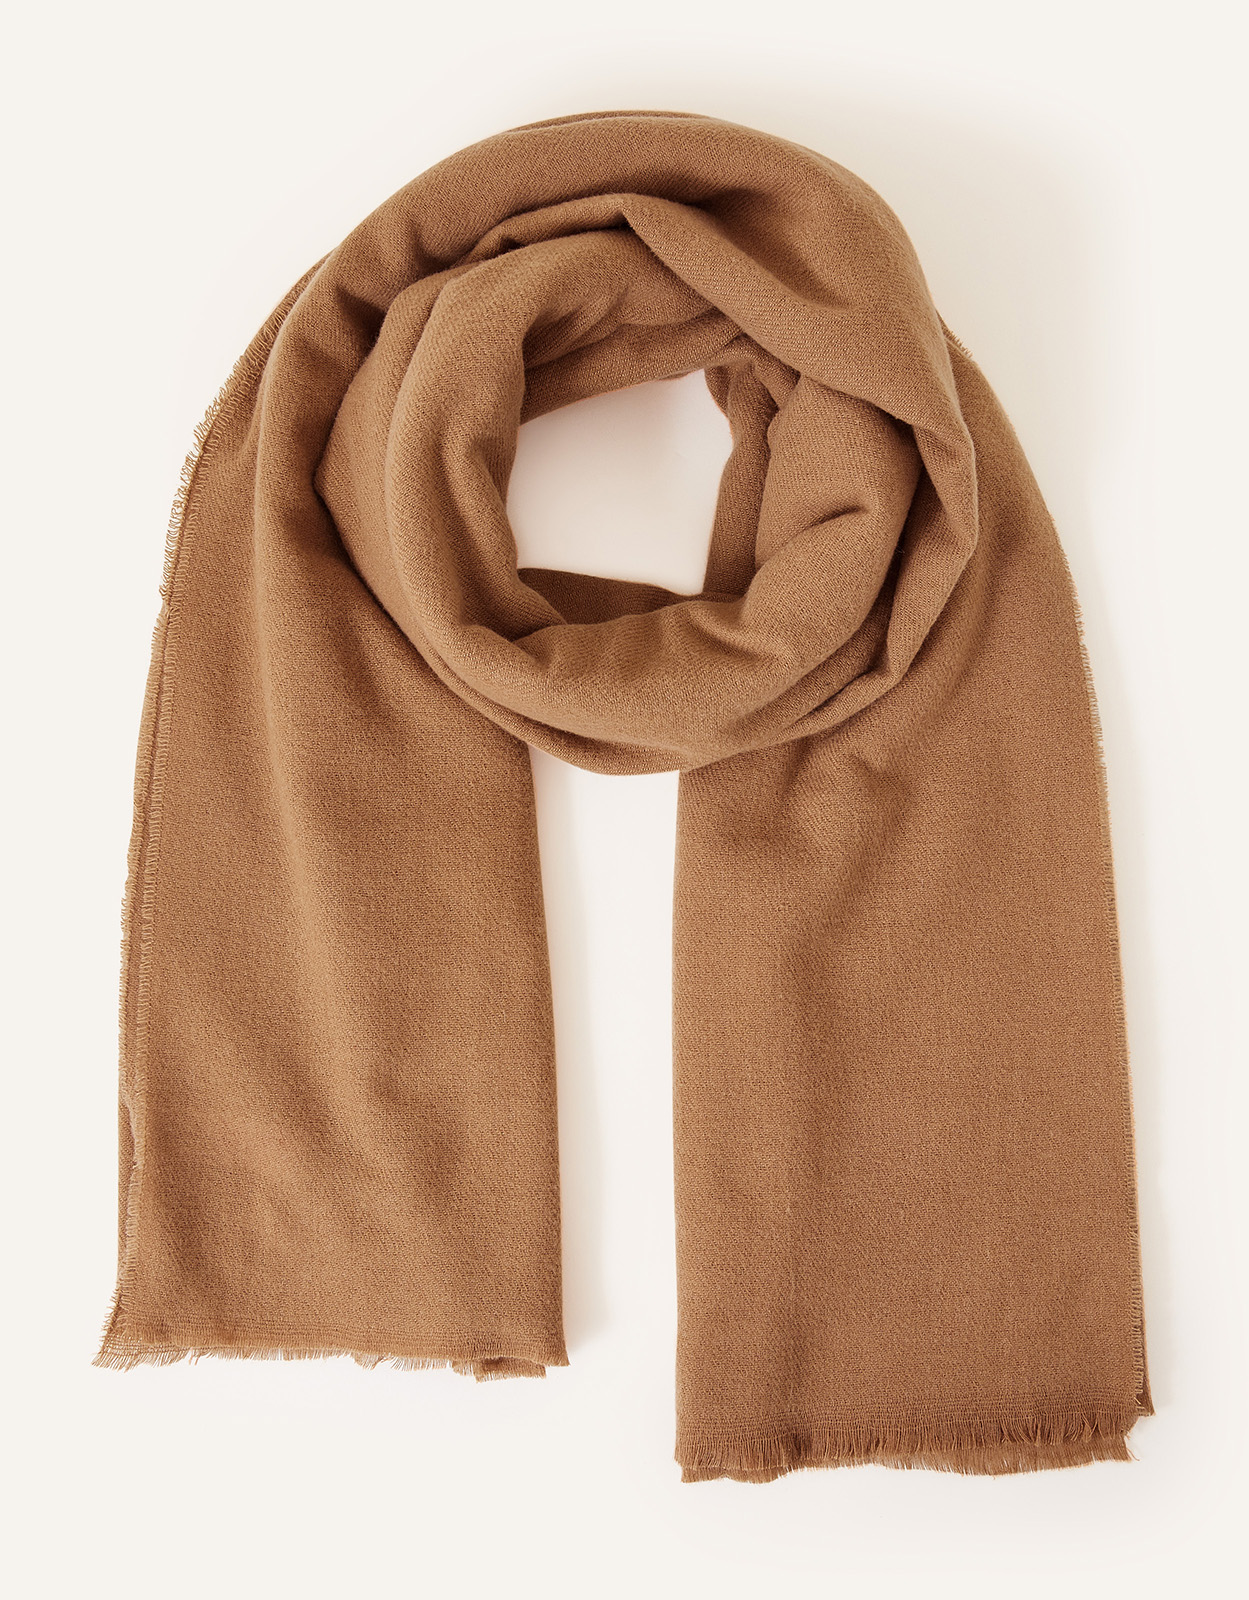 Accessorize Women's Brown Grace Super-Soft Blanket Scarf, Size: 100x180cm